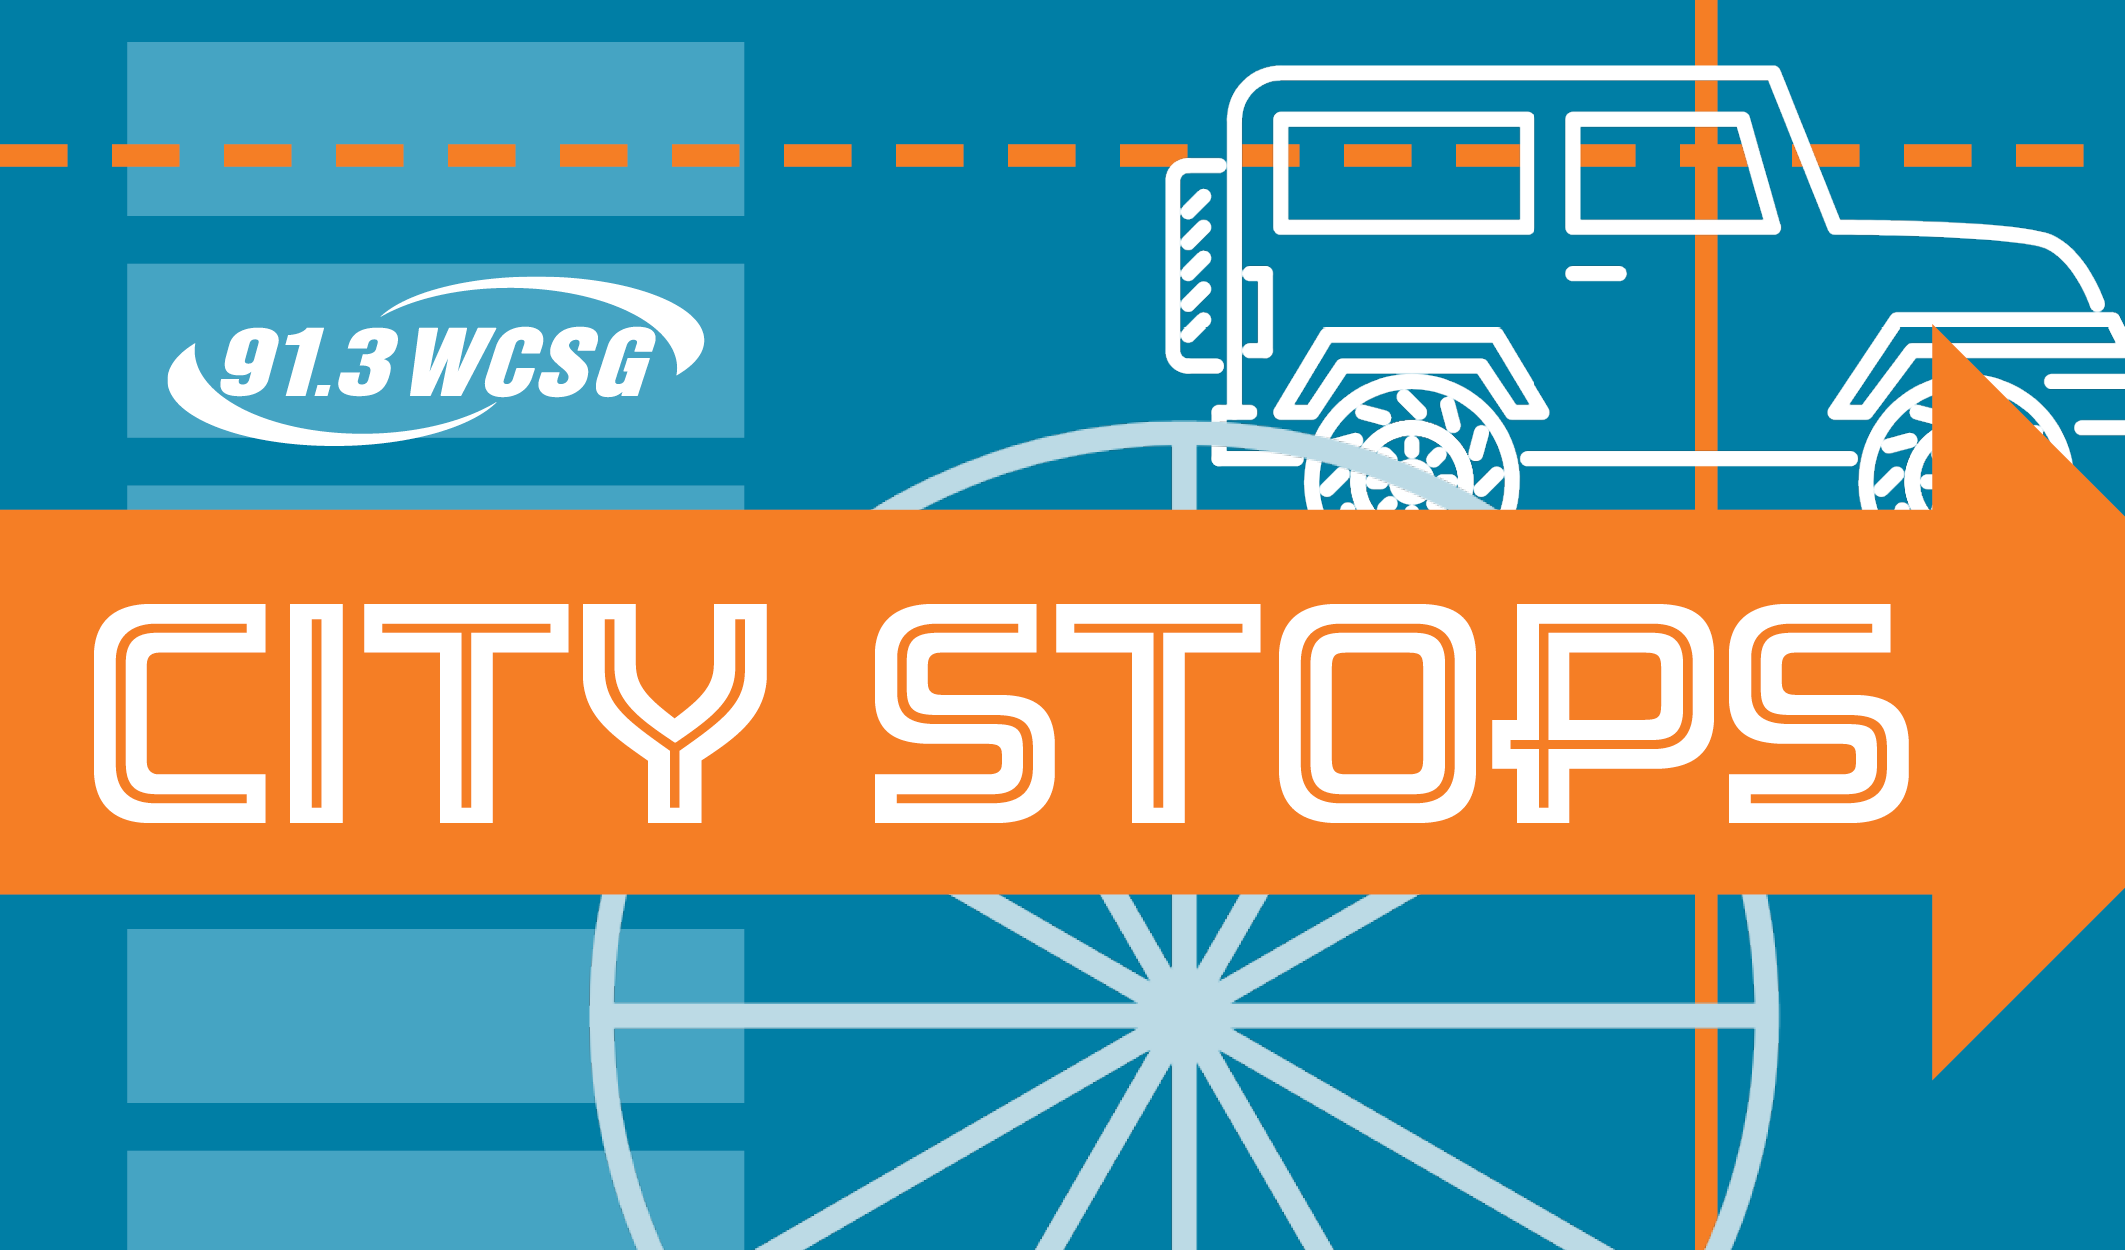 WCSG City Stops